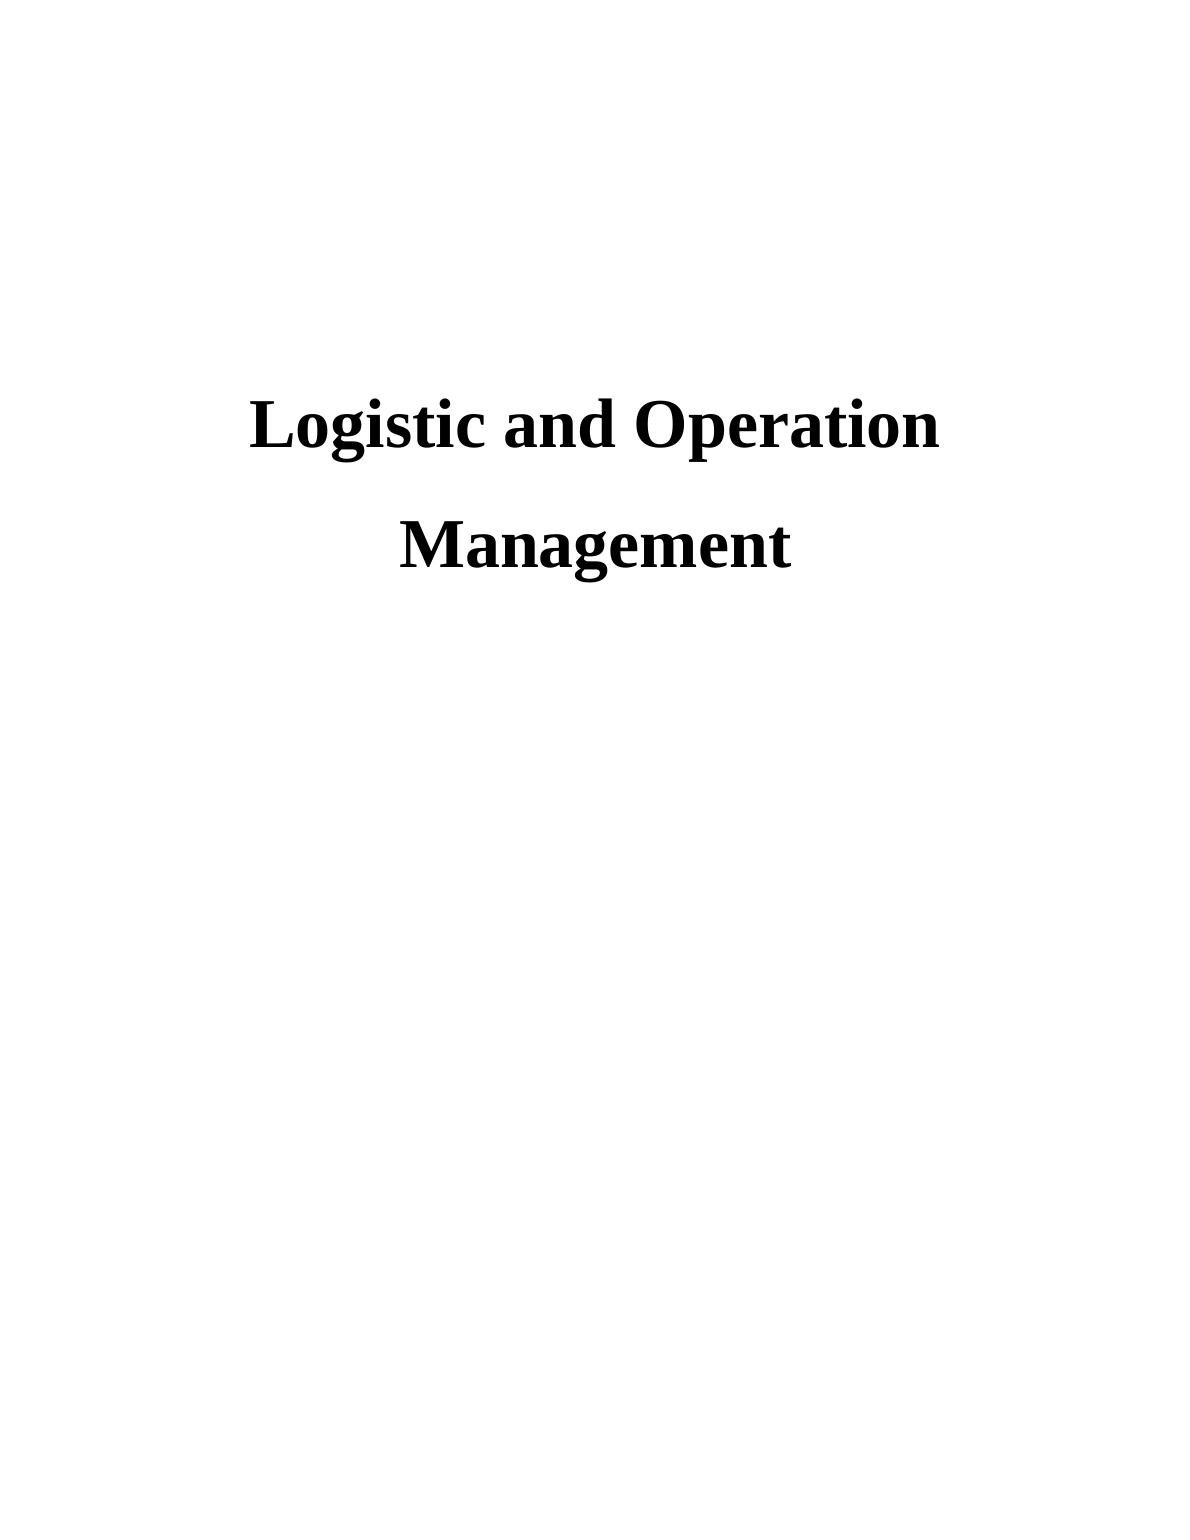 Logistic & Operation Management Of IKEA_1